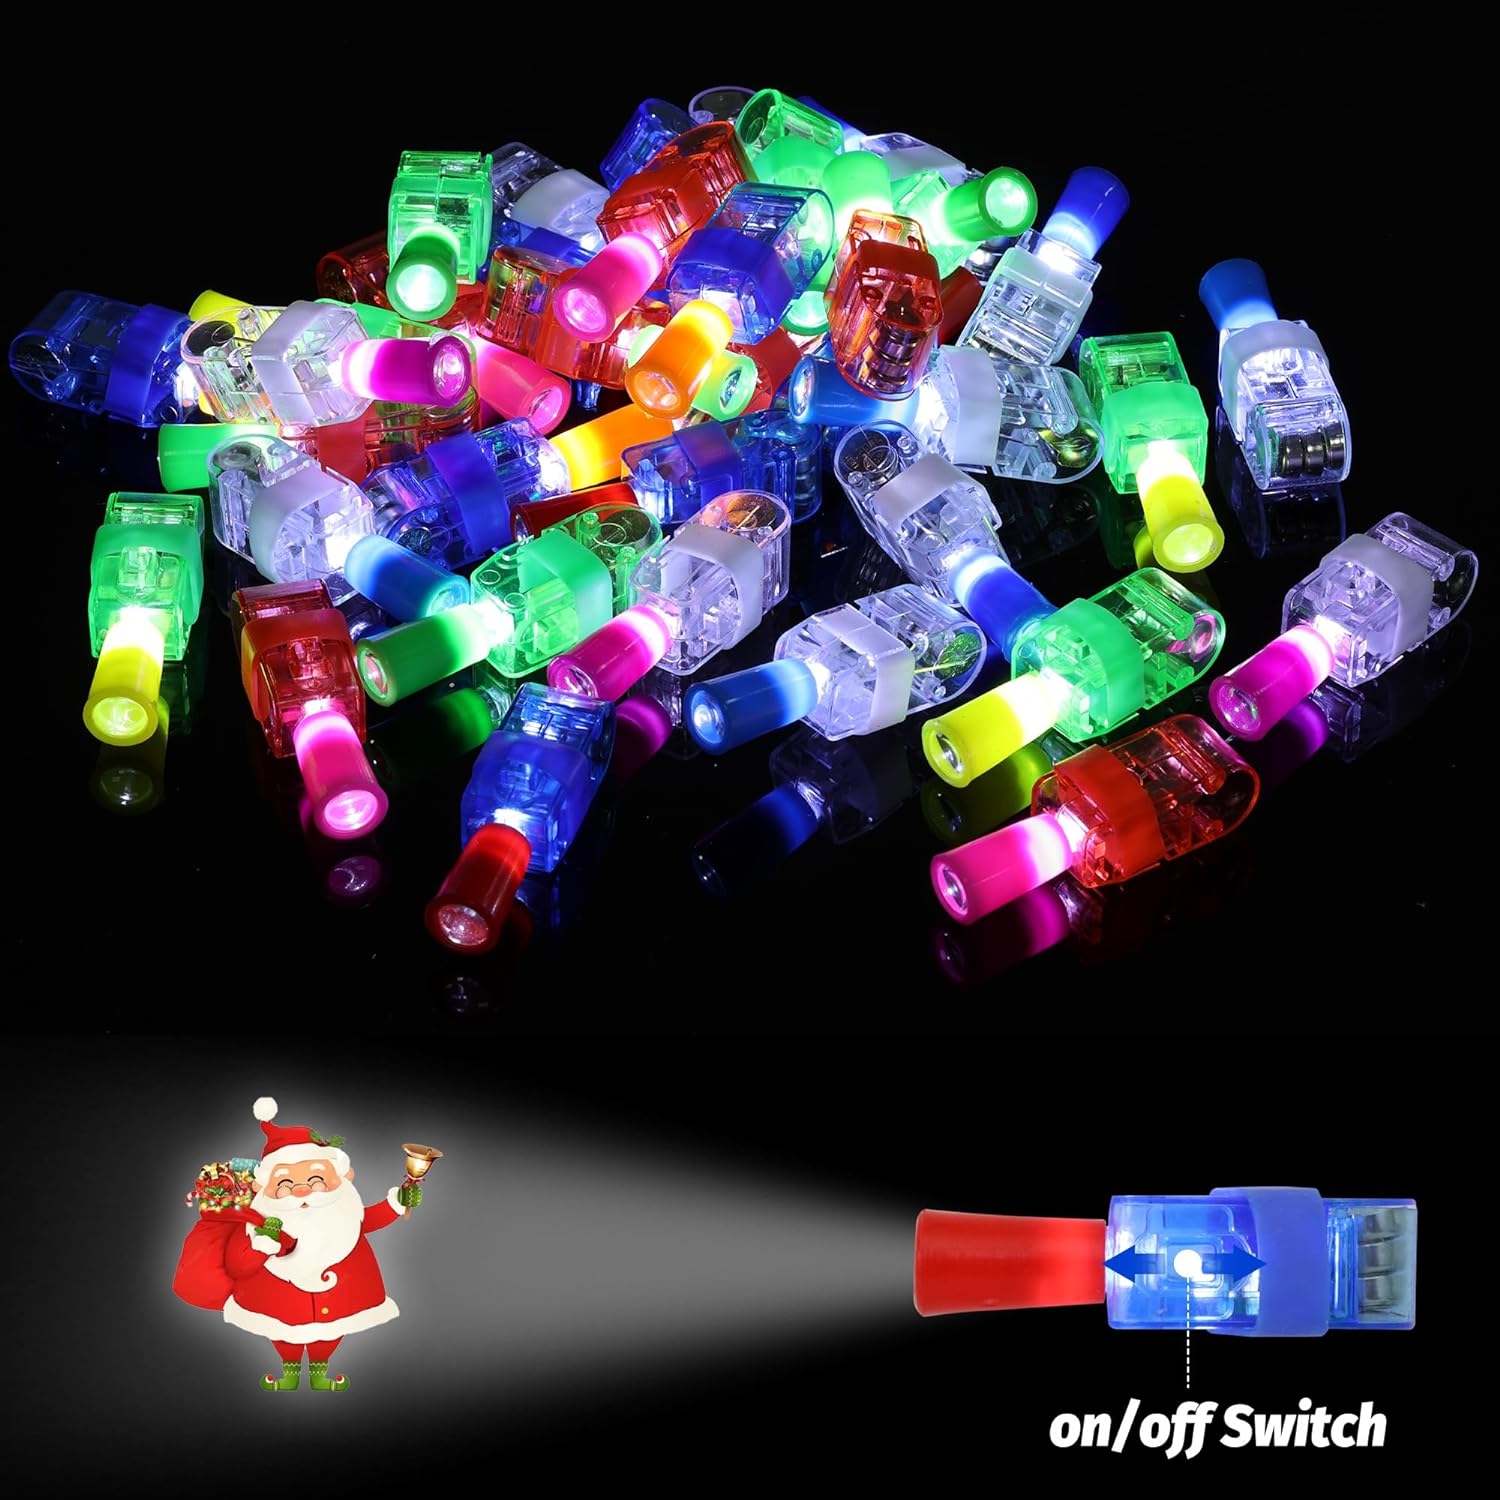 Christmas Party Favors for Kids, 36Pcs LED Light Up Finger Lights Christmas Stocking Stuffers - Cykapu